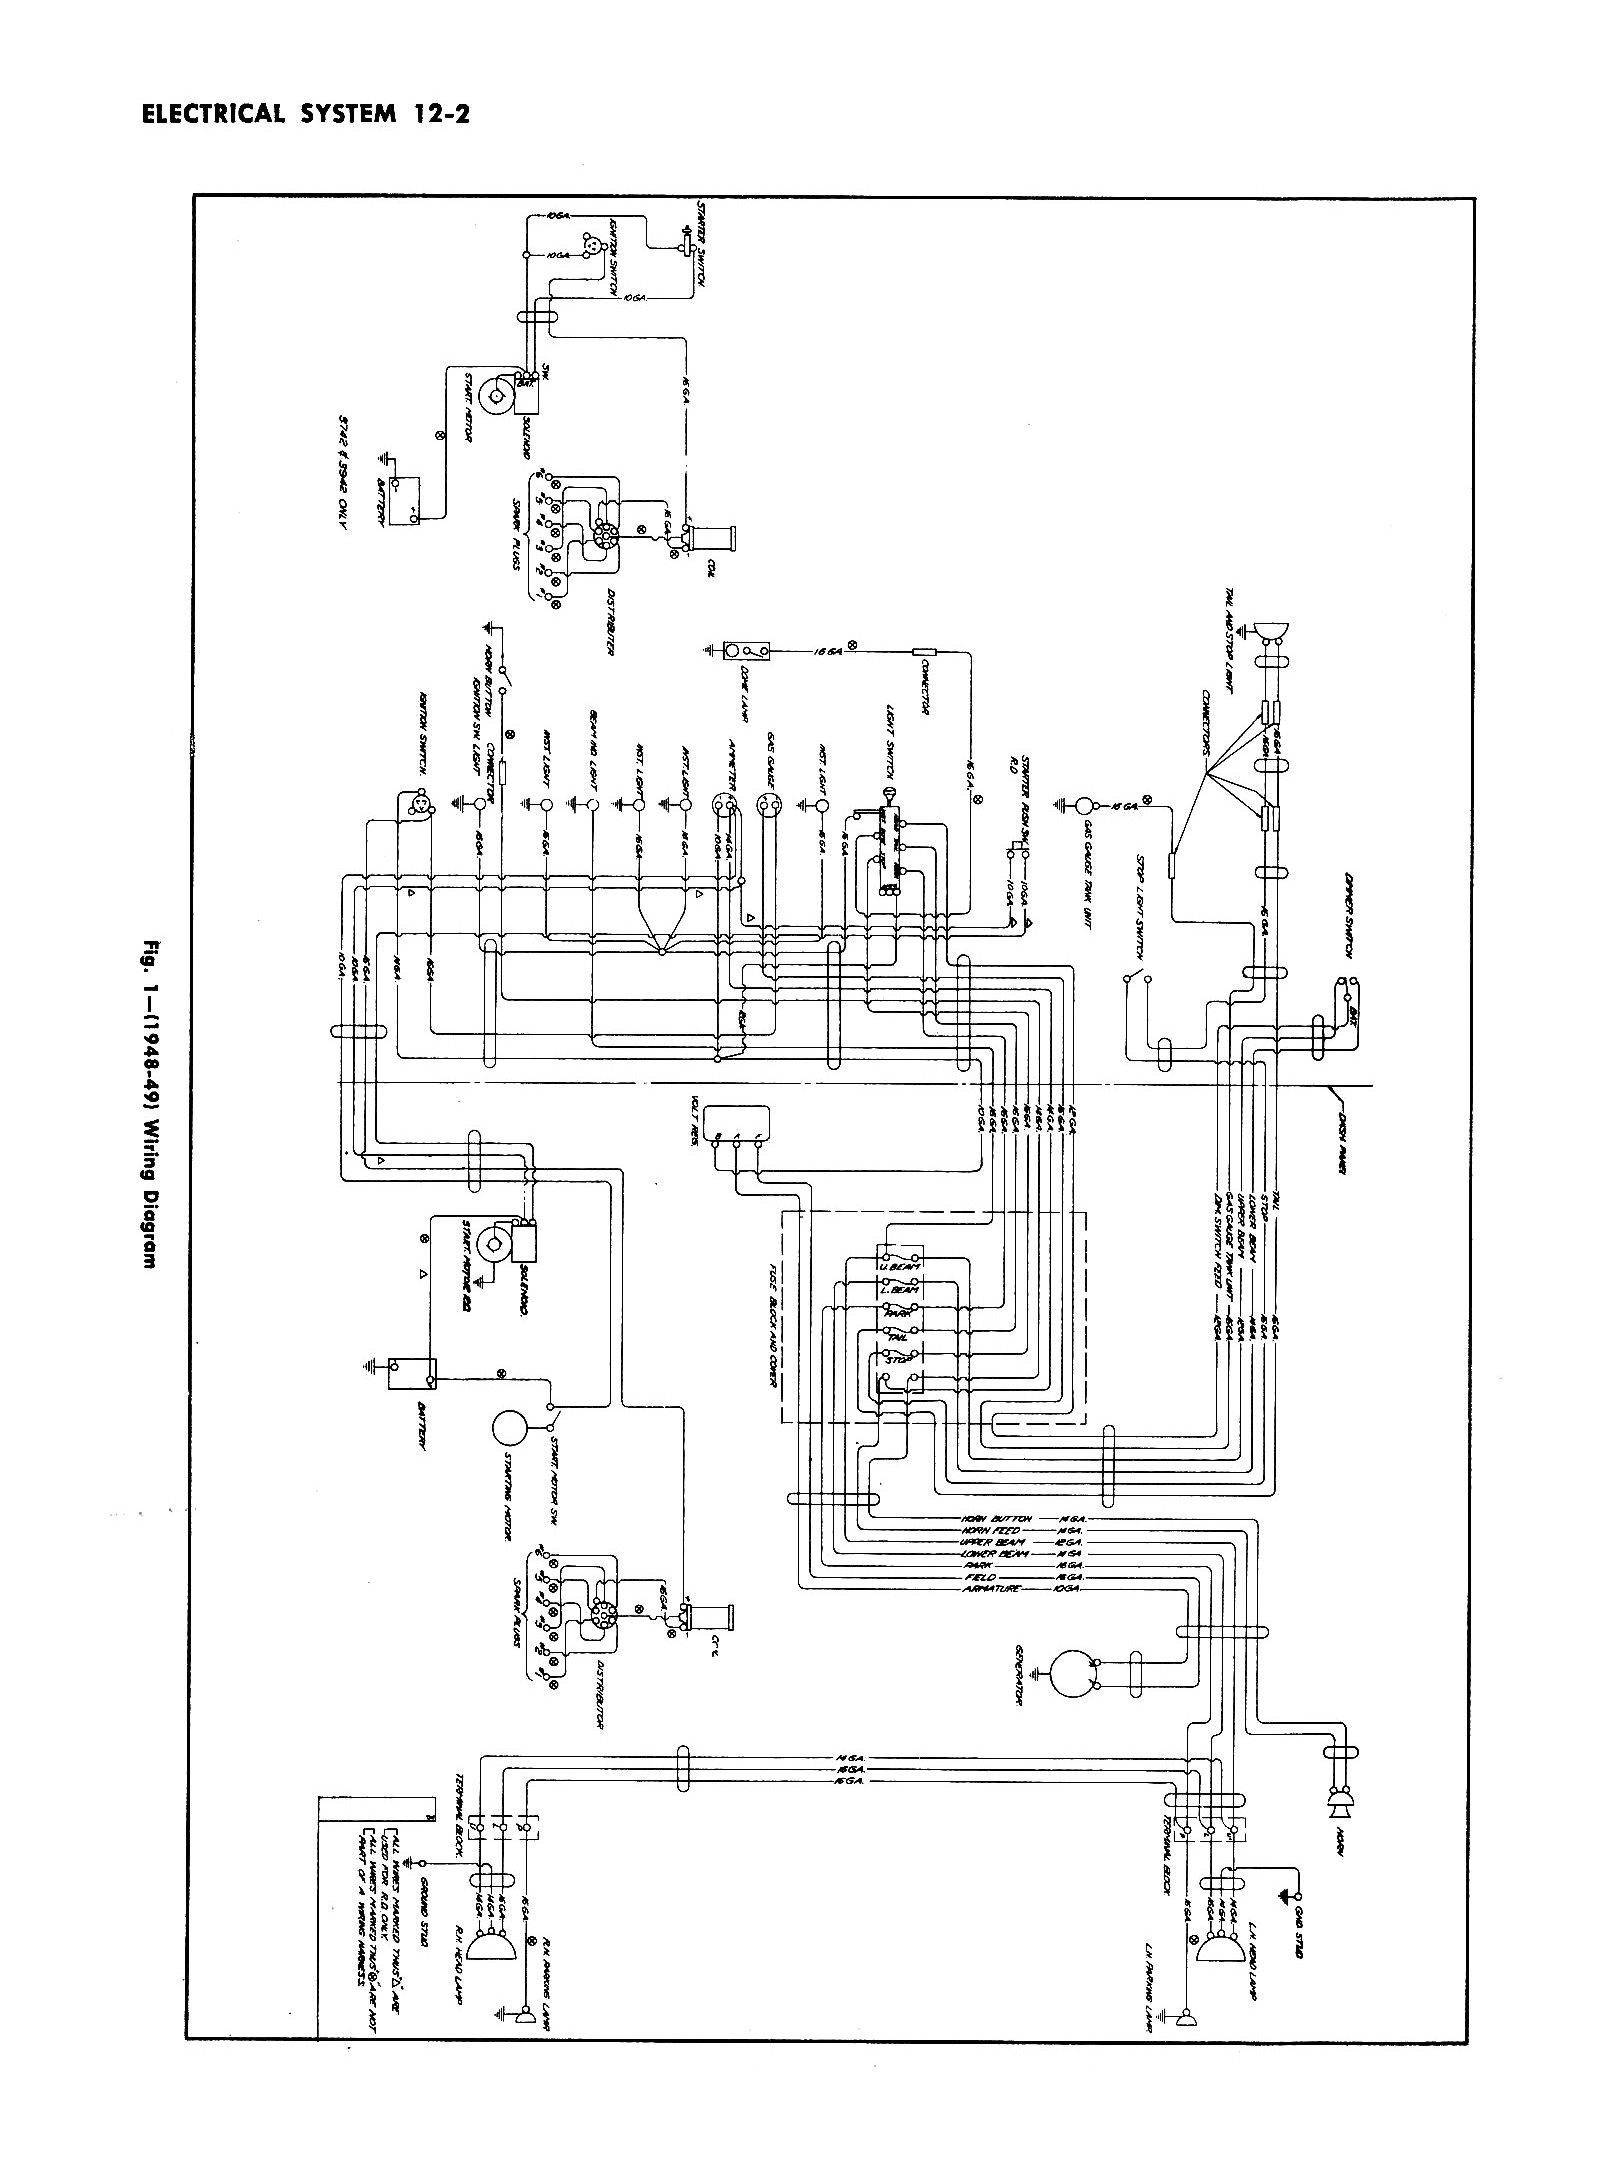 Chevrolet Truck Parts Diagram Chevy Wiring Diagrams Of Chevrolet Truck Parts Diagram